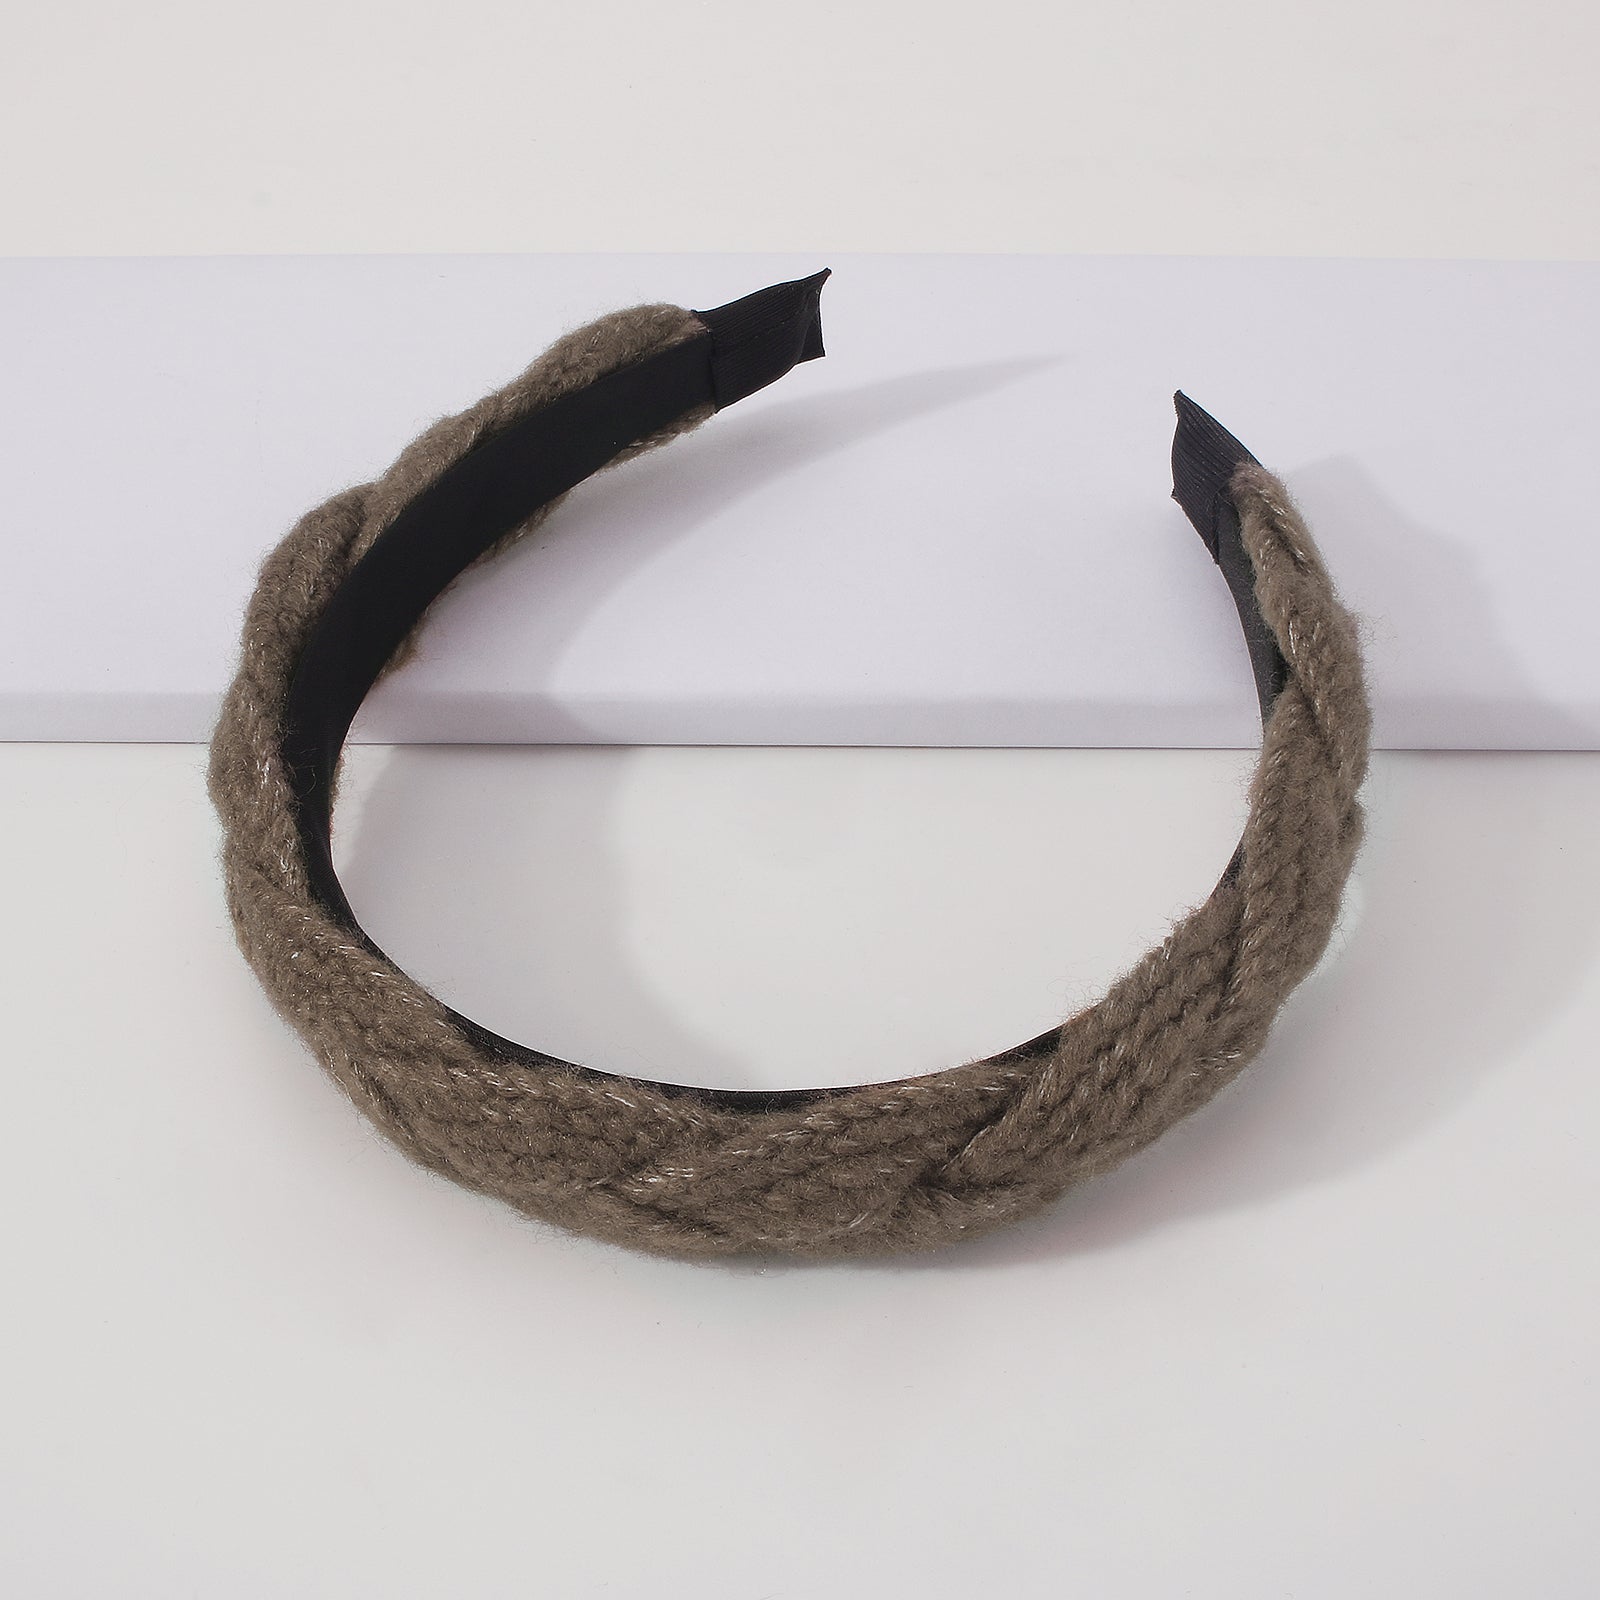 Exquisite Fall Winter Braided Fabric Headband medyjewelry